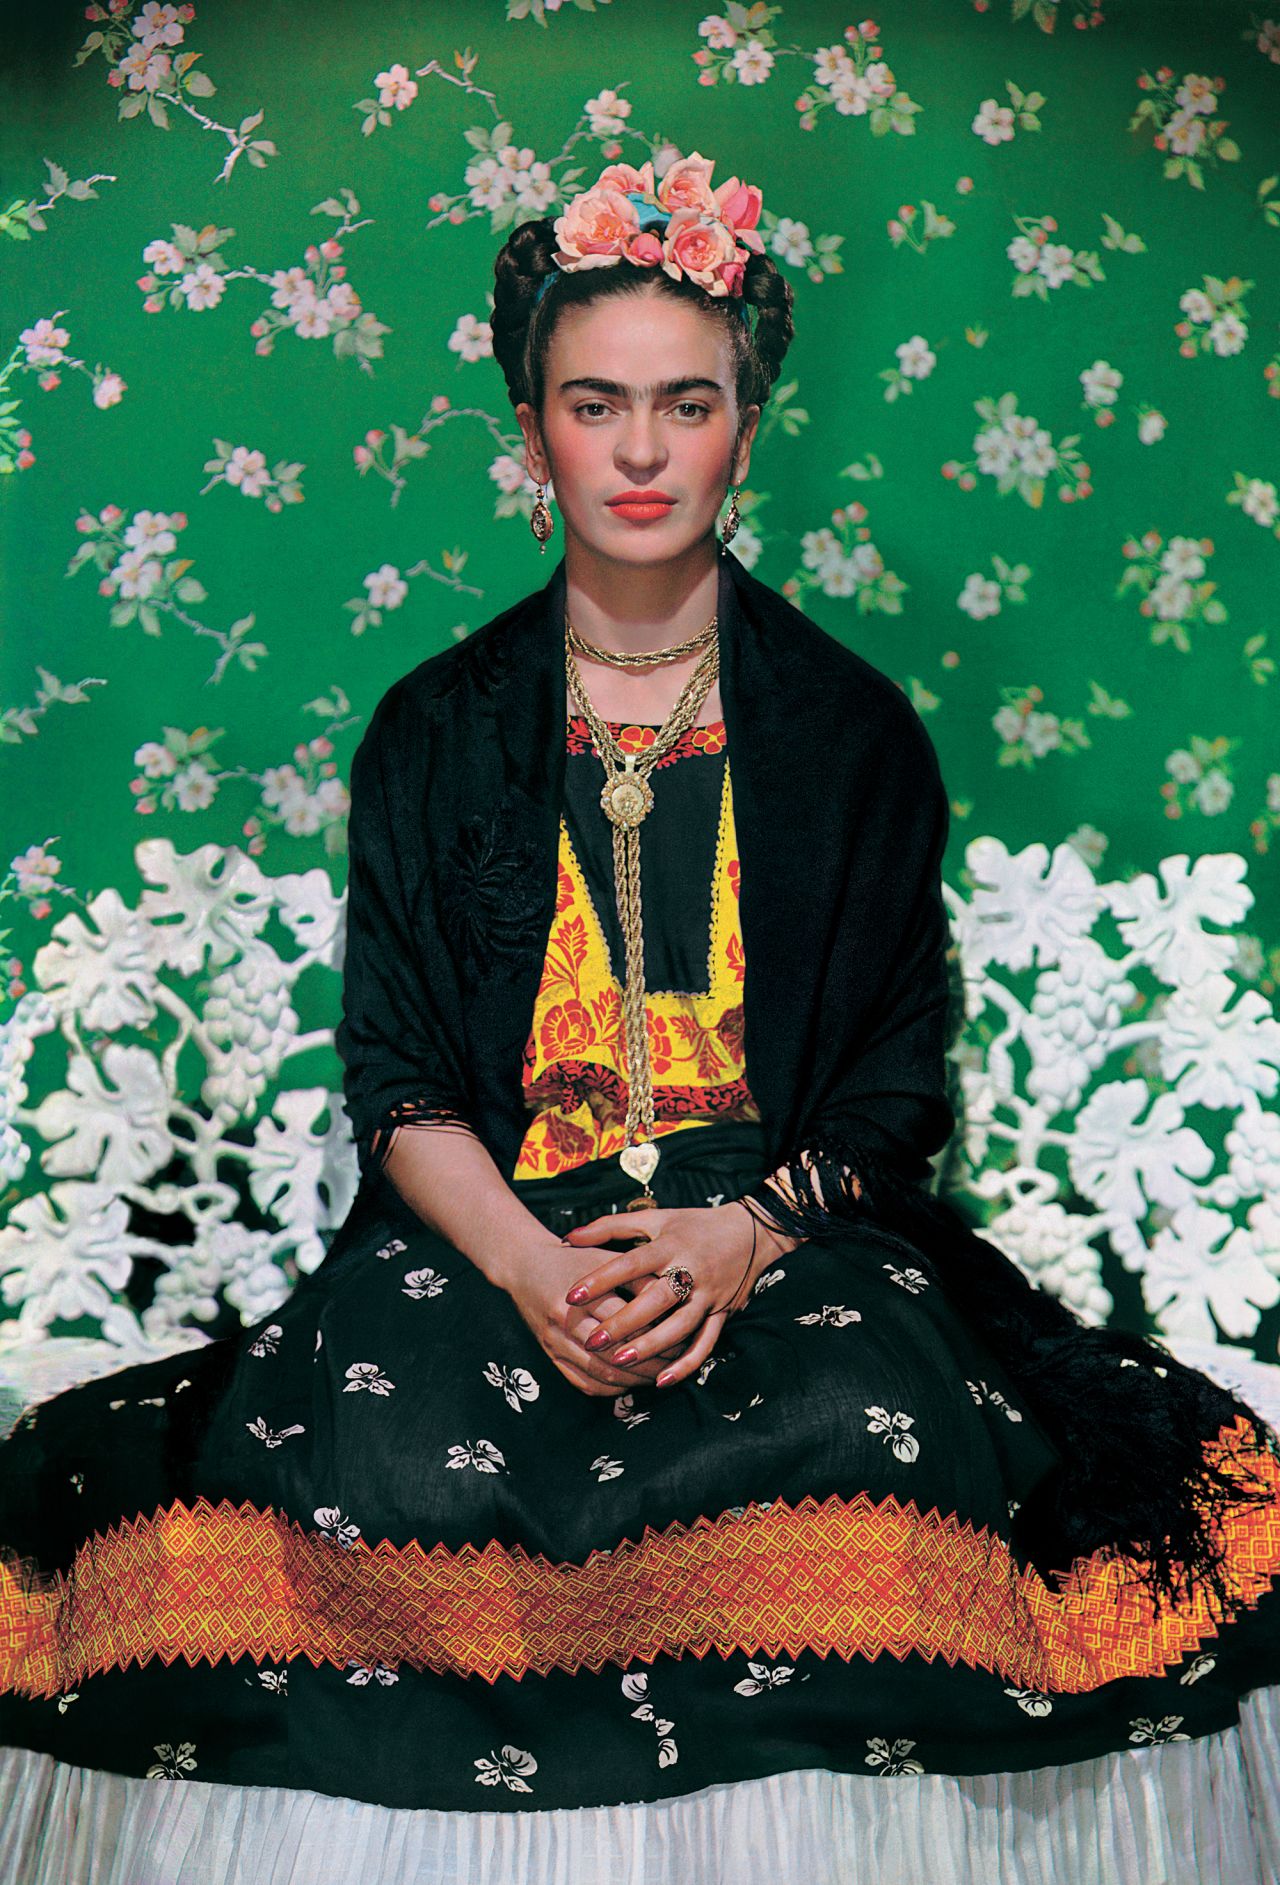 "Frida Kahlo on a Bench" (1938) by Nickolas Muray